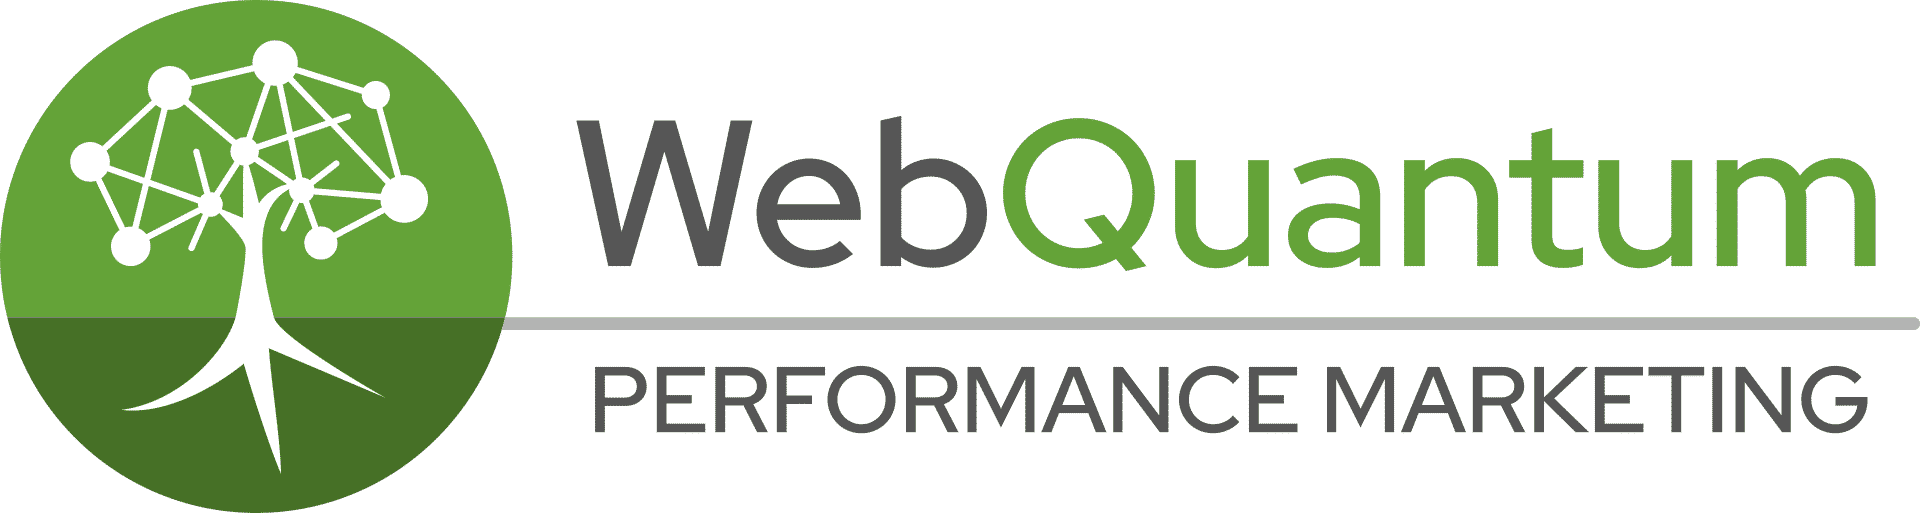 web-quantum-logo-baum.png